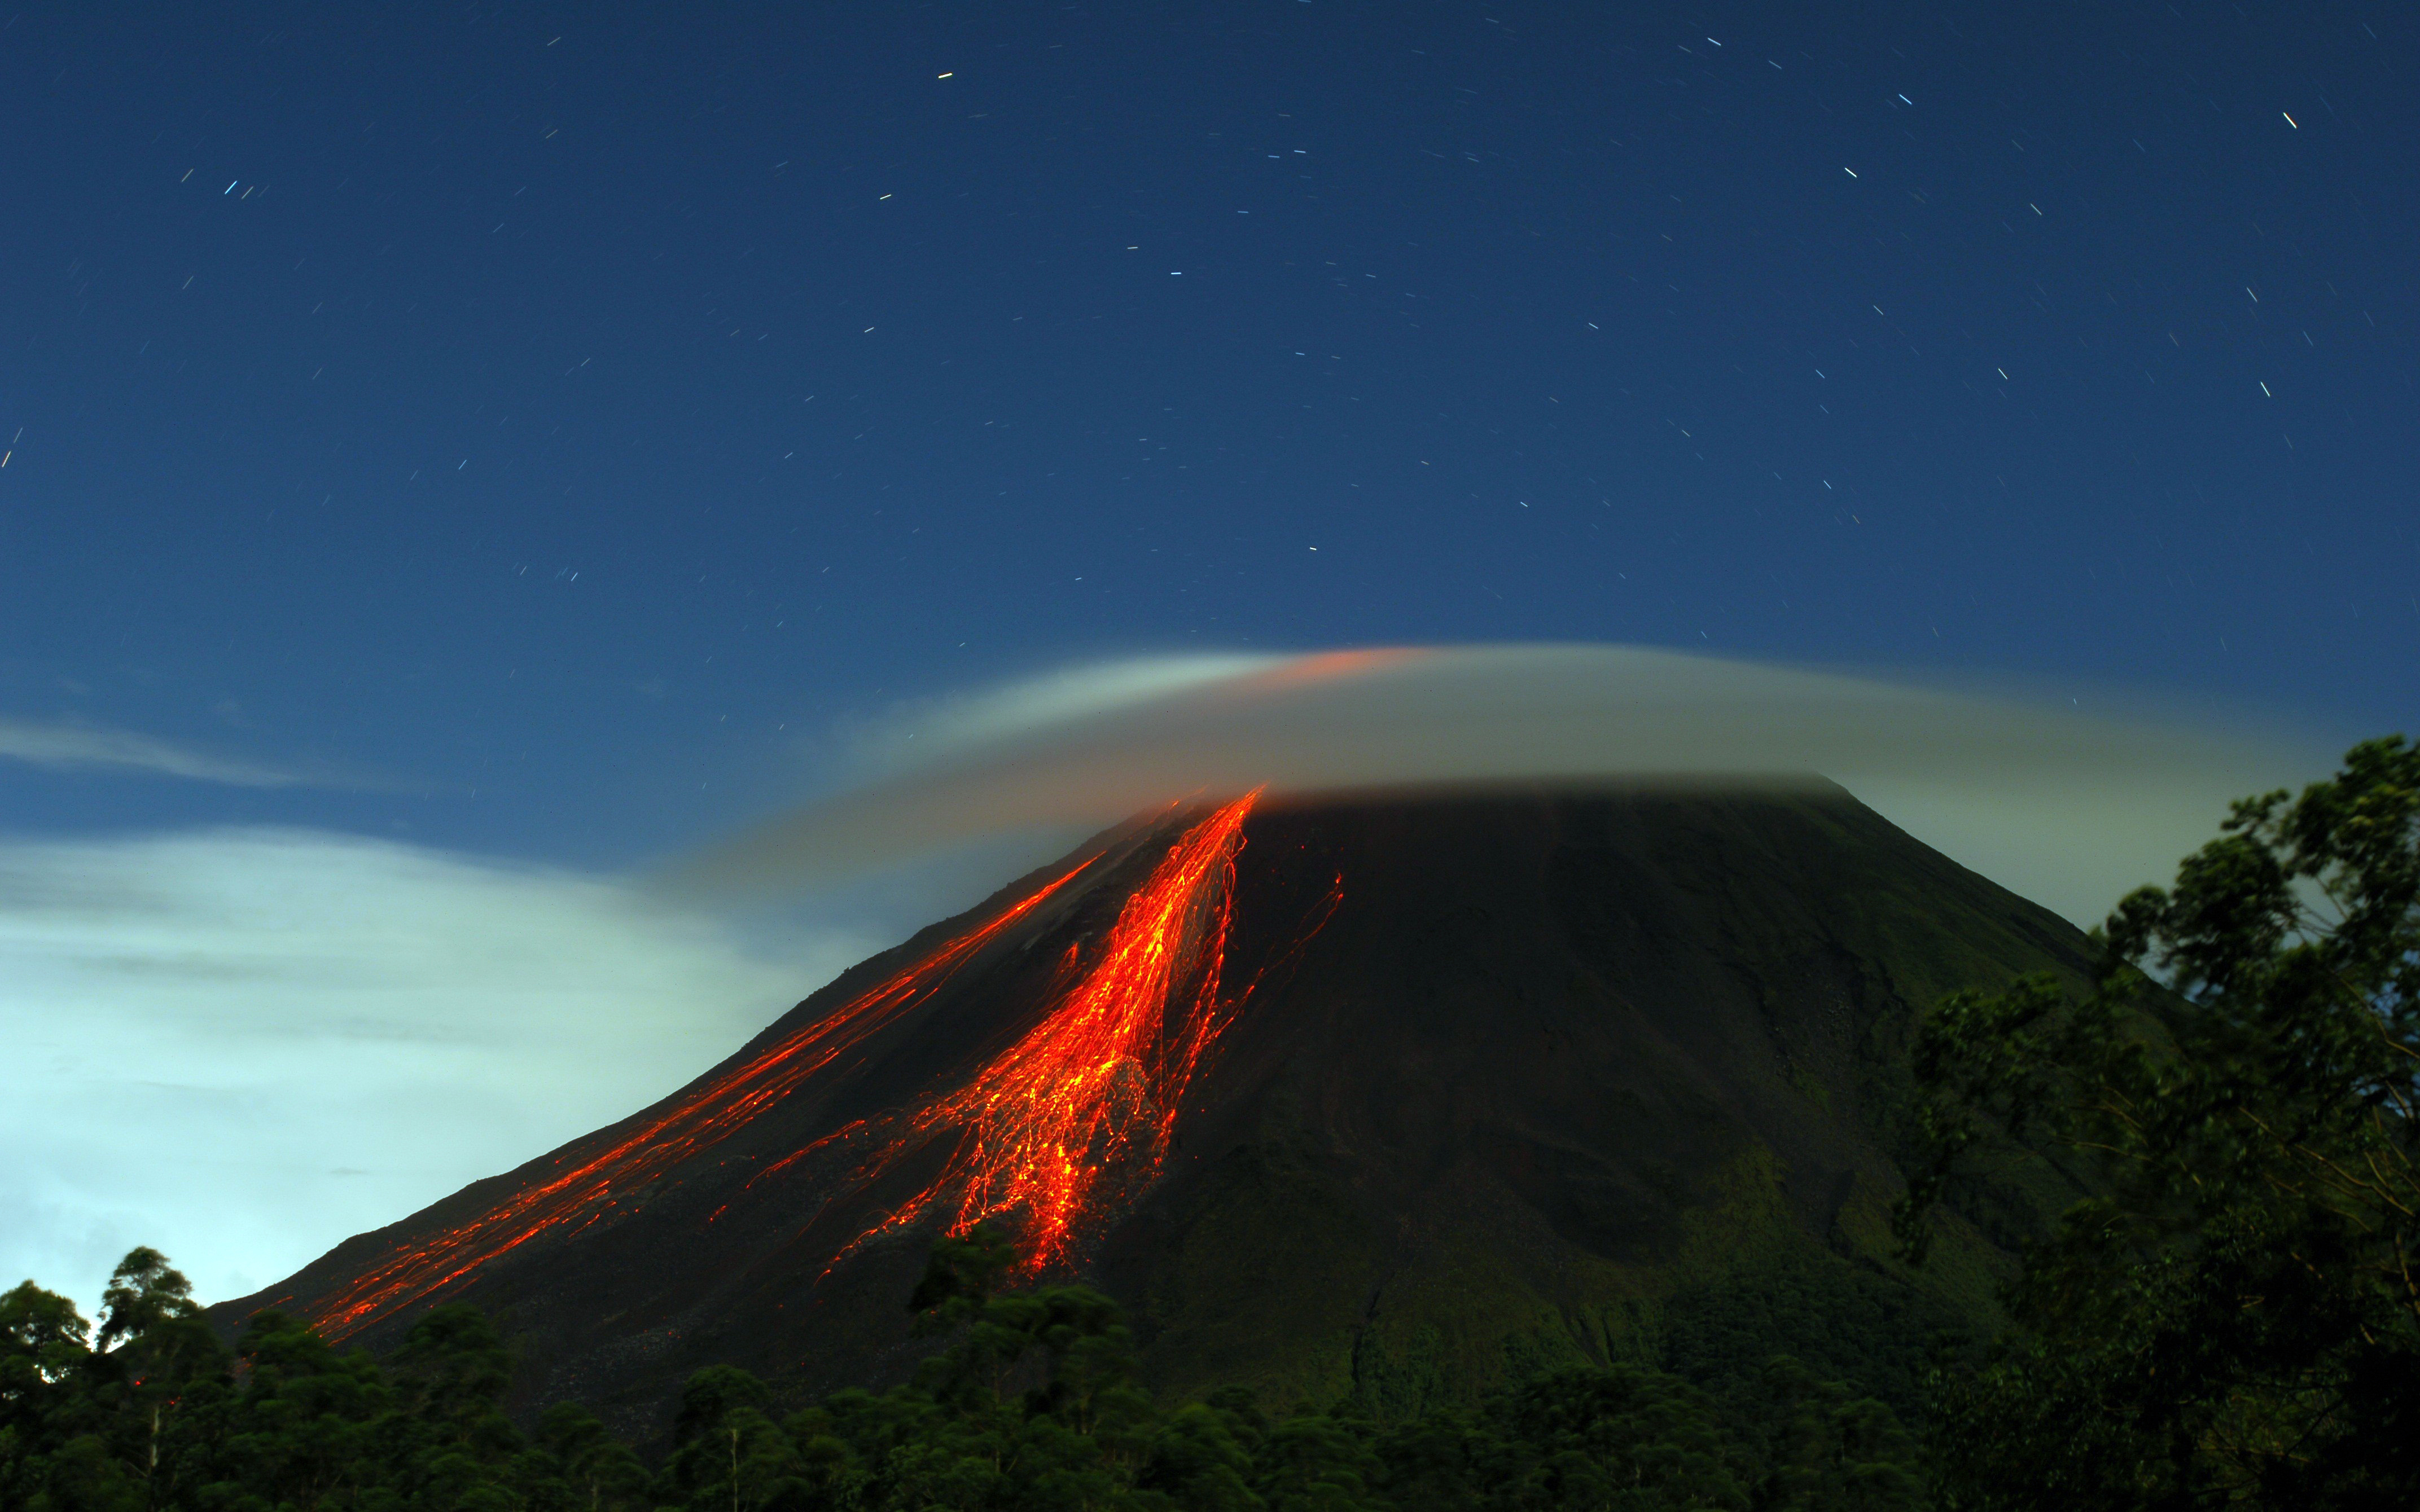  Volcano  4k  Ultra HD Wallpaper  Background Image 